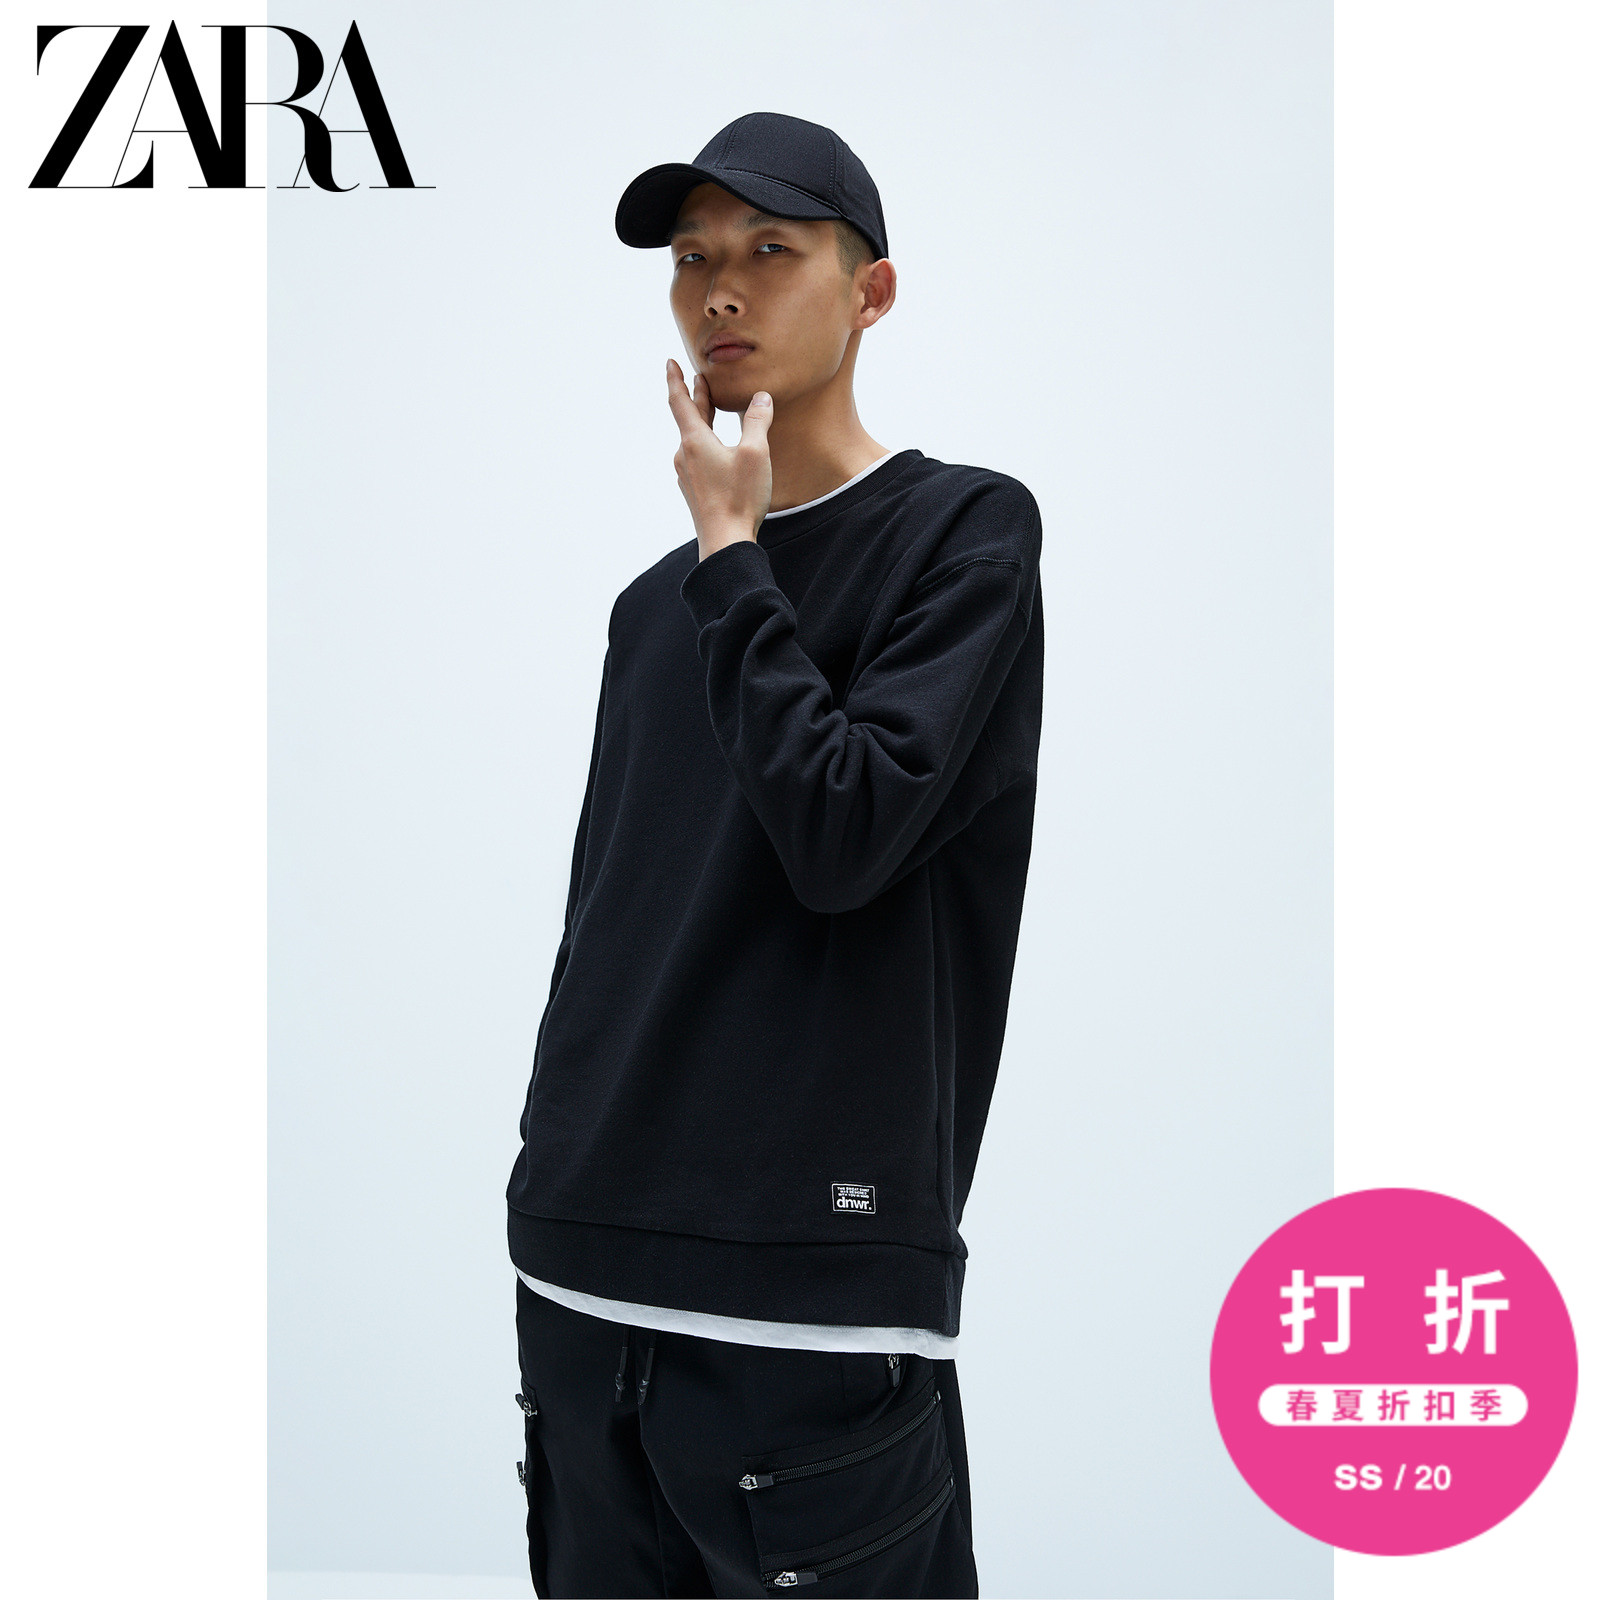 ZARA 新款 男装 拼接加大码宽松运动衫卫衣 04087408800 XL (185/104A) 黑色